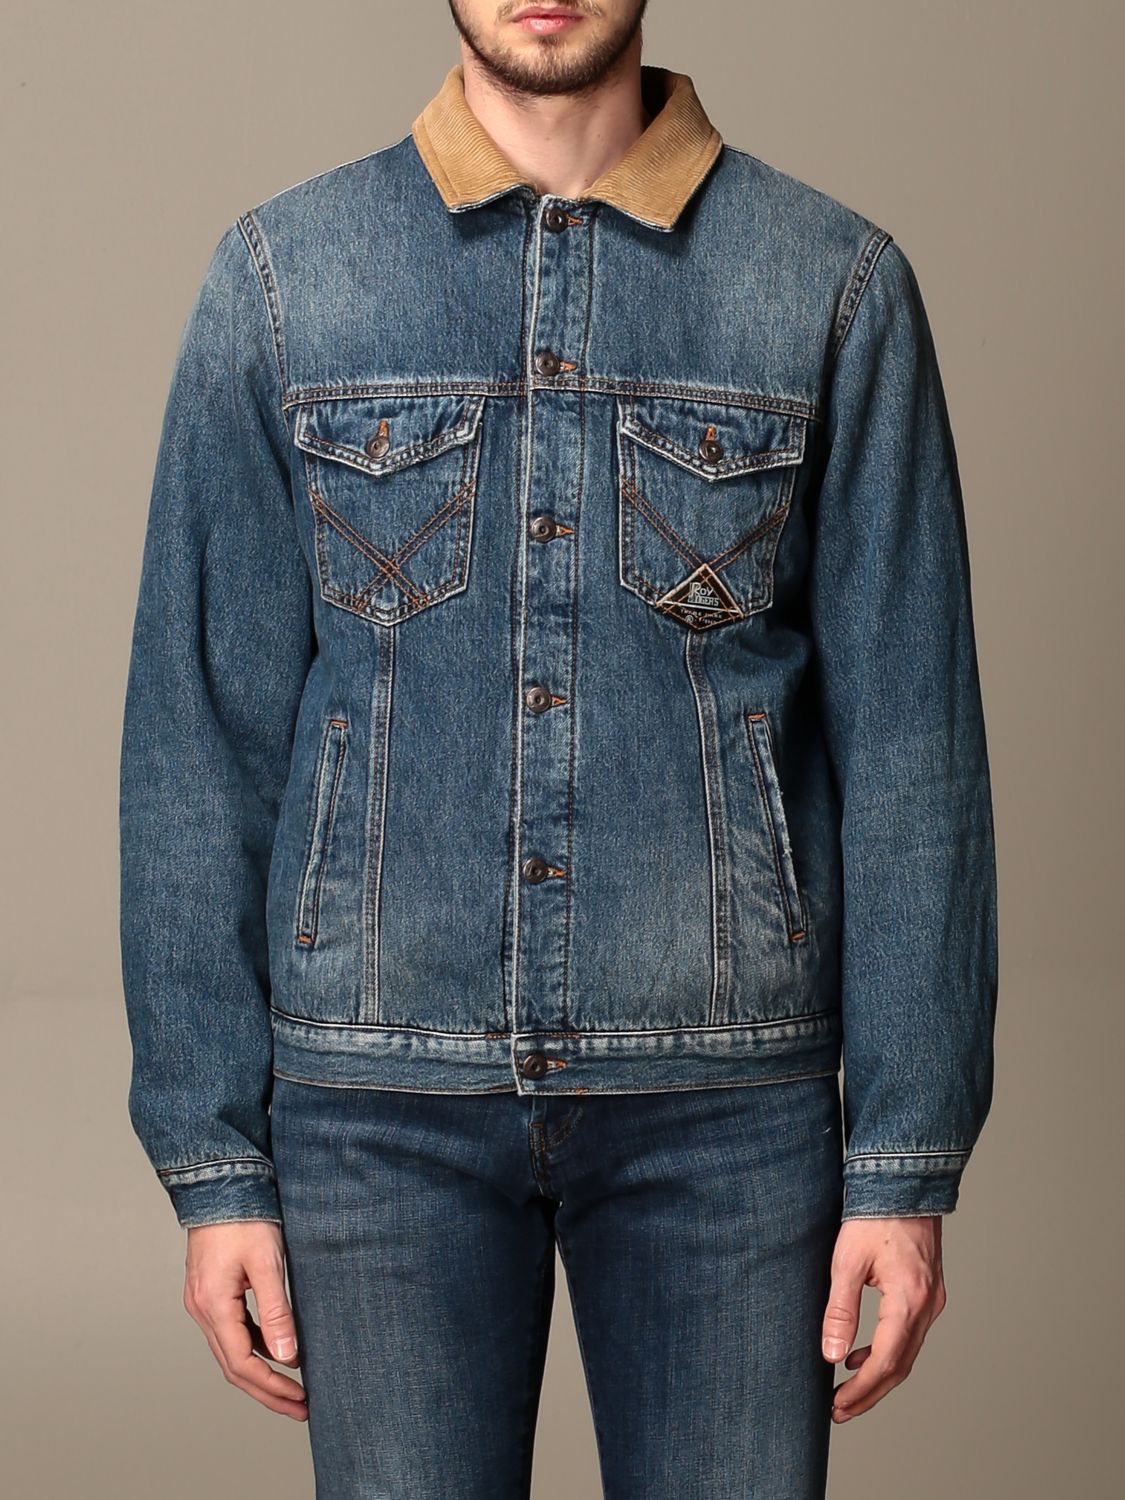 Roy Rogers Outlet: denim jacket with contrast collar - Denim | Roy ...